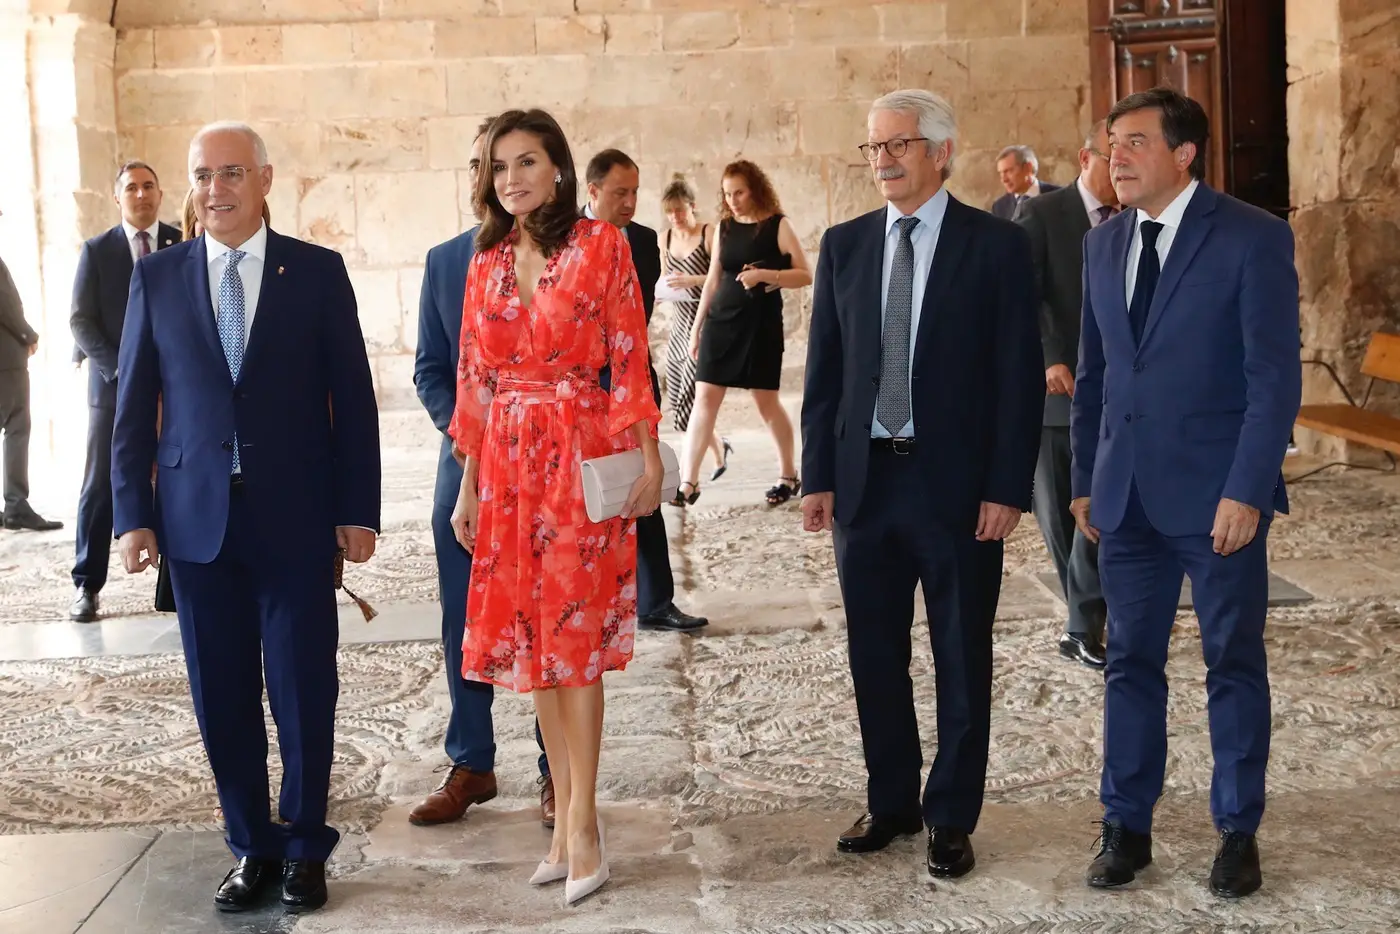 Queen Letizia in red Adolfo Dominguez Floral dress at Seminar Closing in Rioja